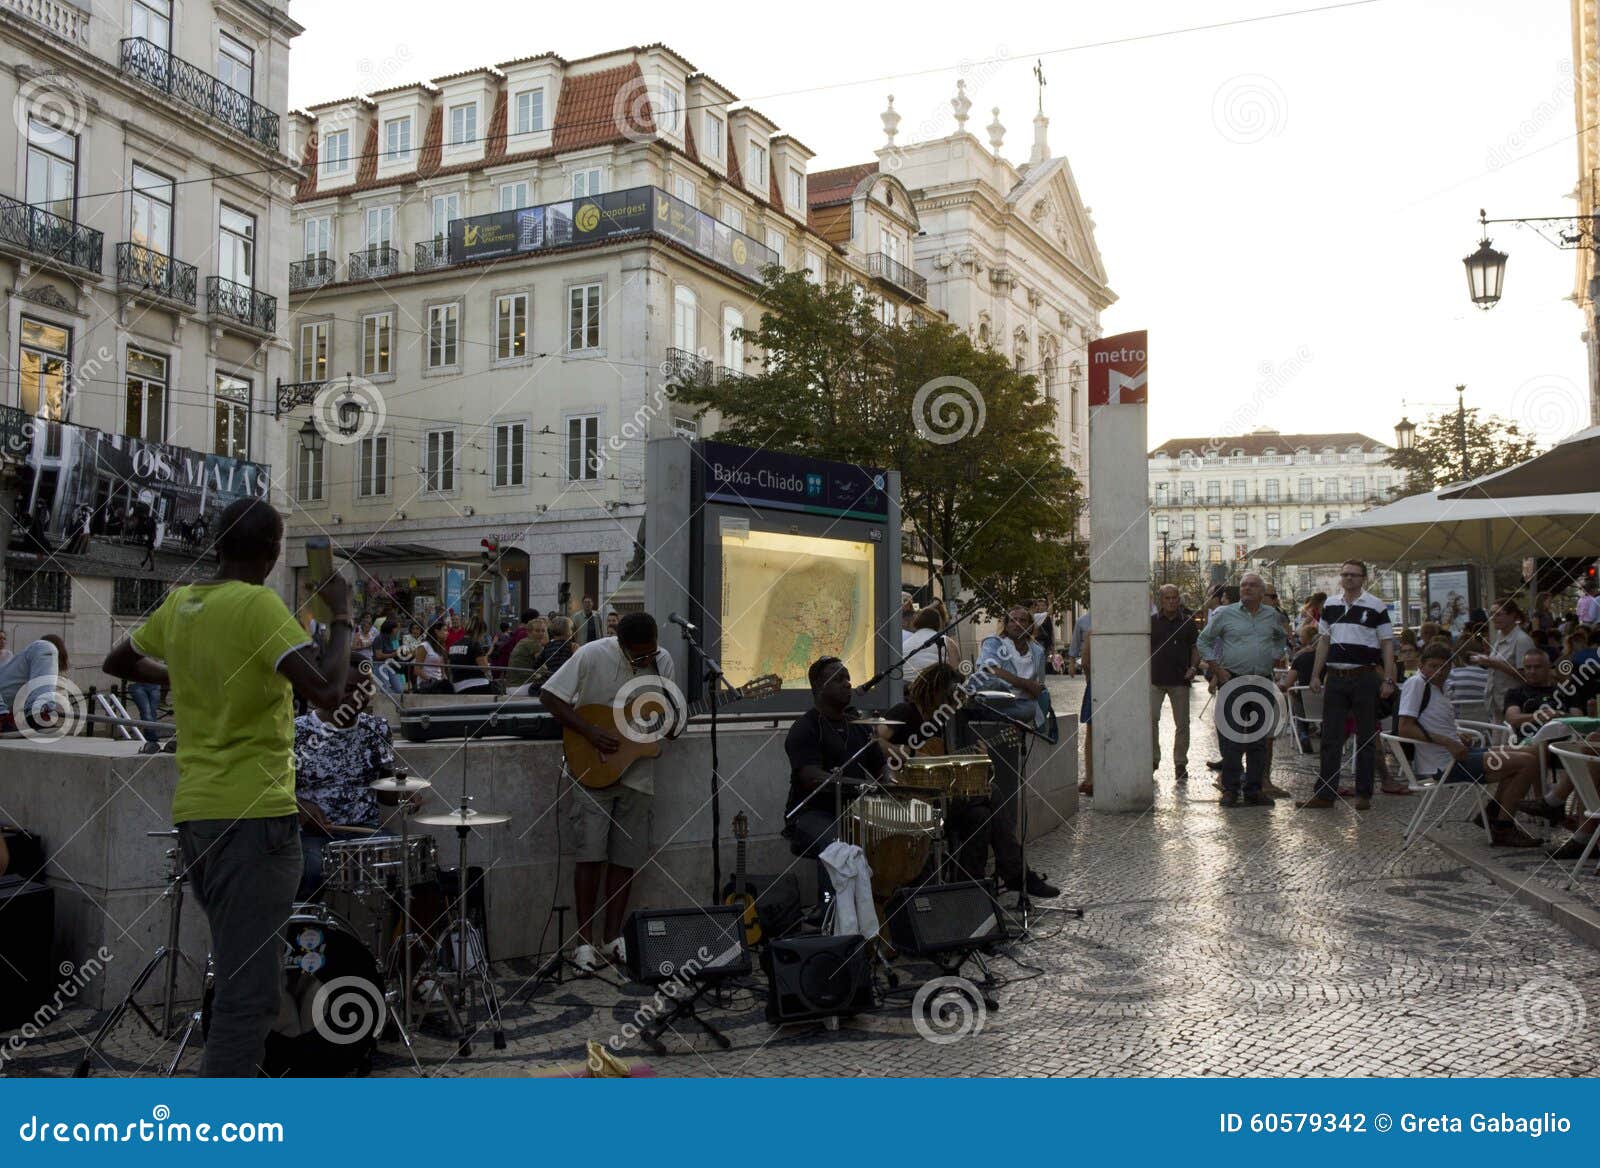 Baixa Chiado Metro Station in Lisbon, Editorial Photography - Image of metro,  nossa: 60579342